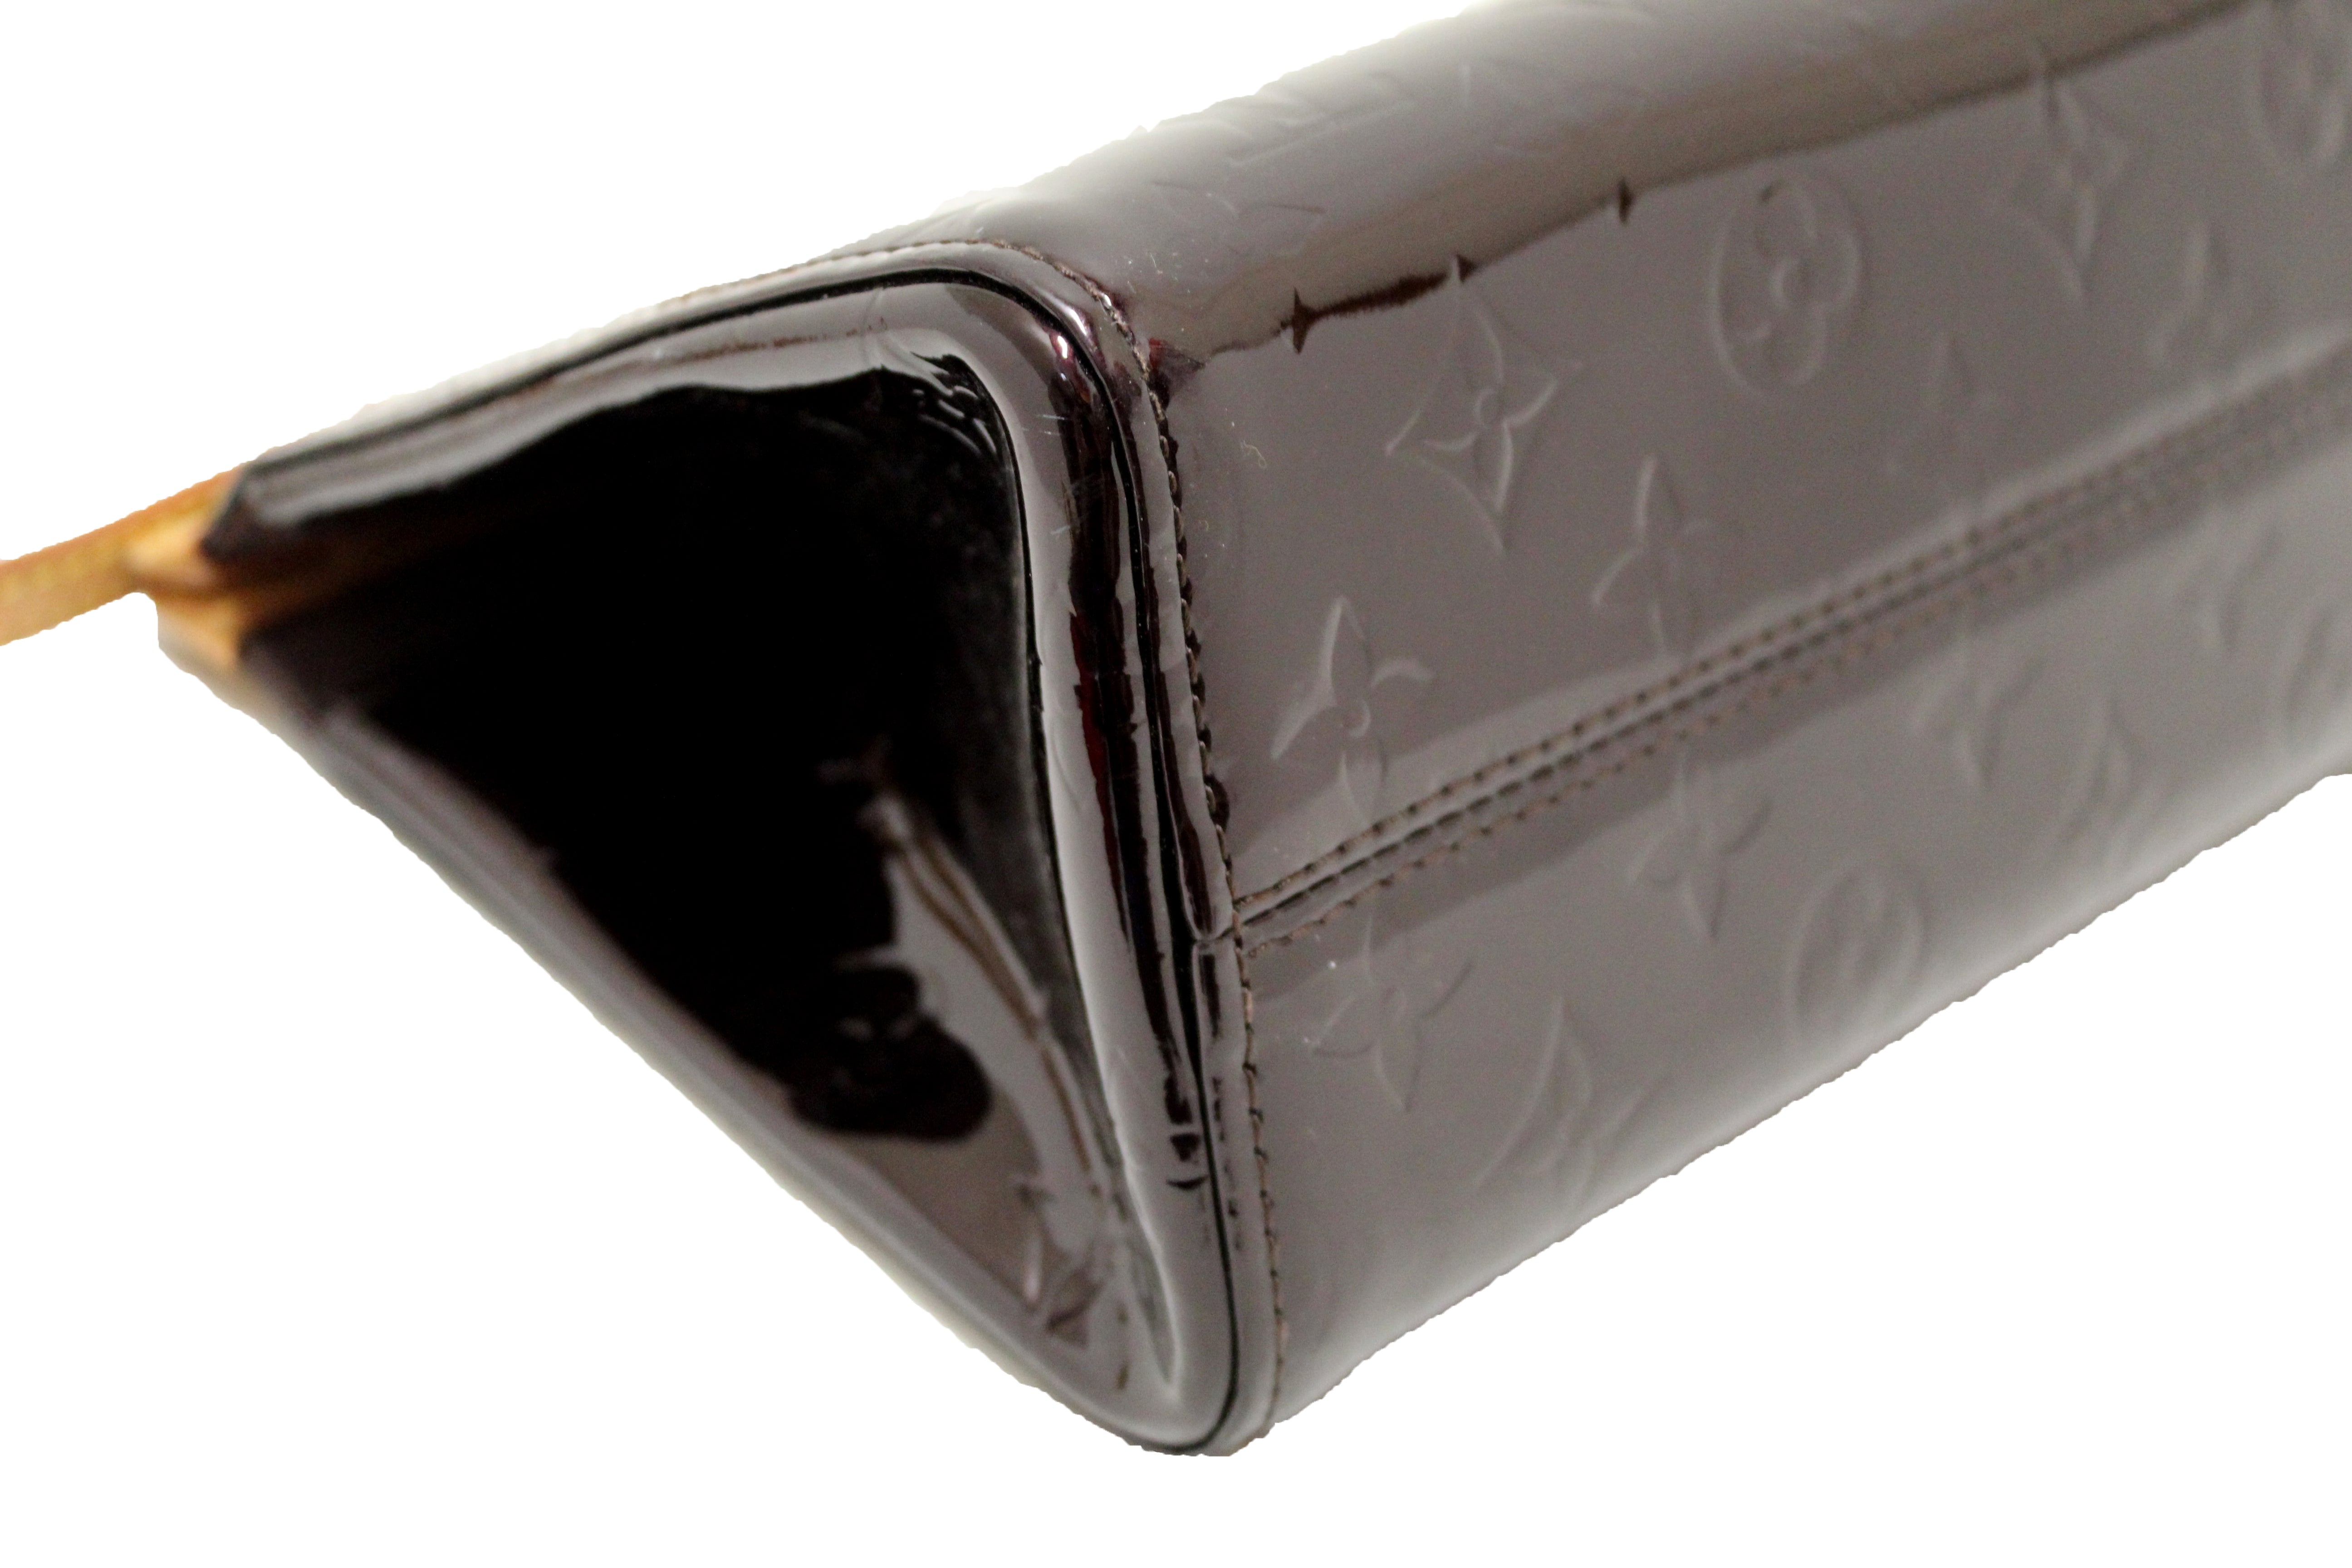 Authentic Louis Vuitton Amarante Monogram Vernis Leather Roxbury Drive Bag  – Italy Station